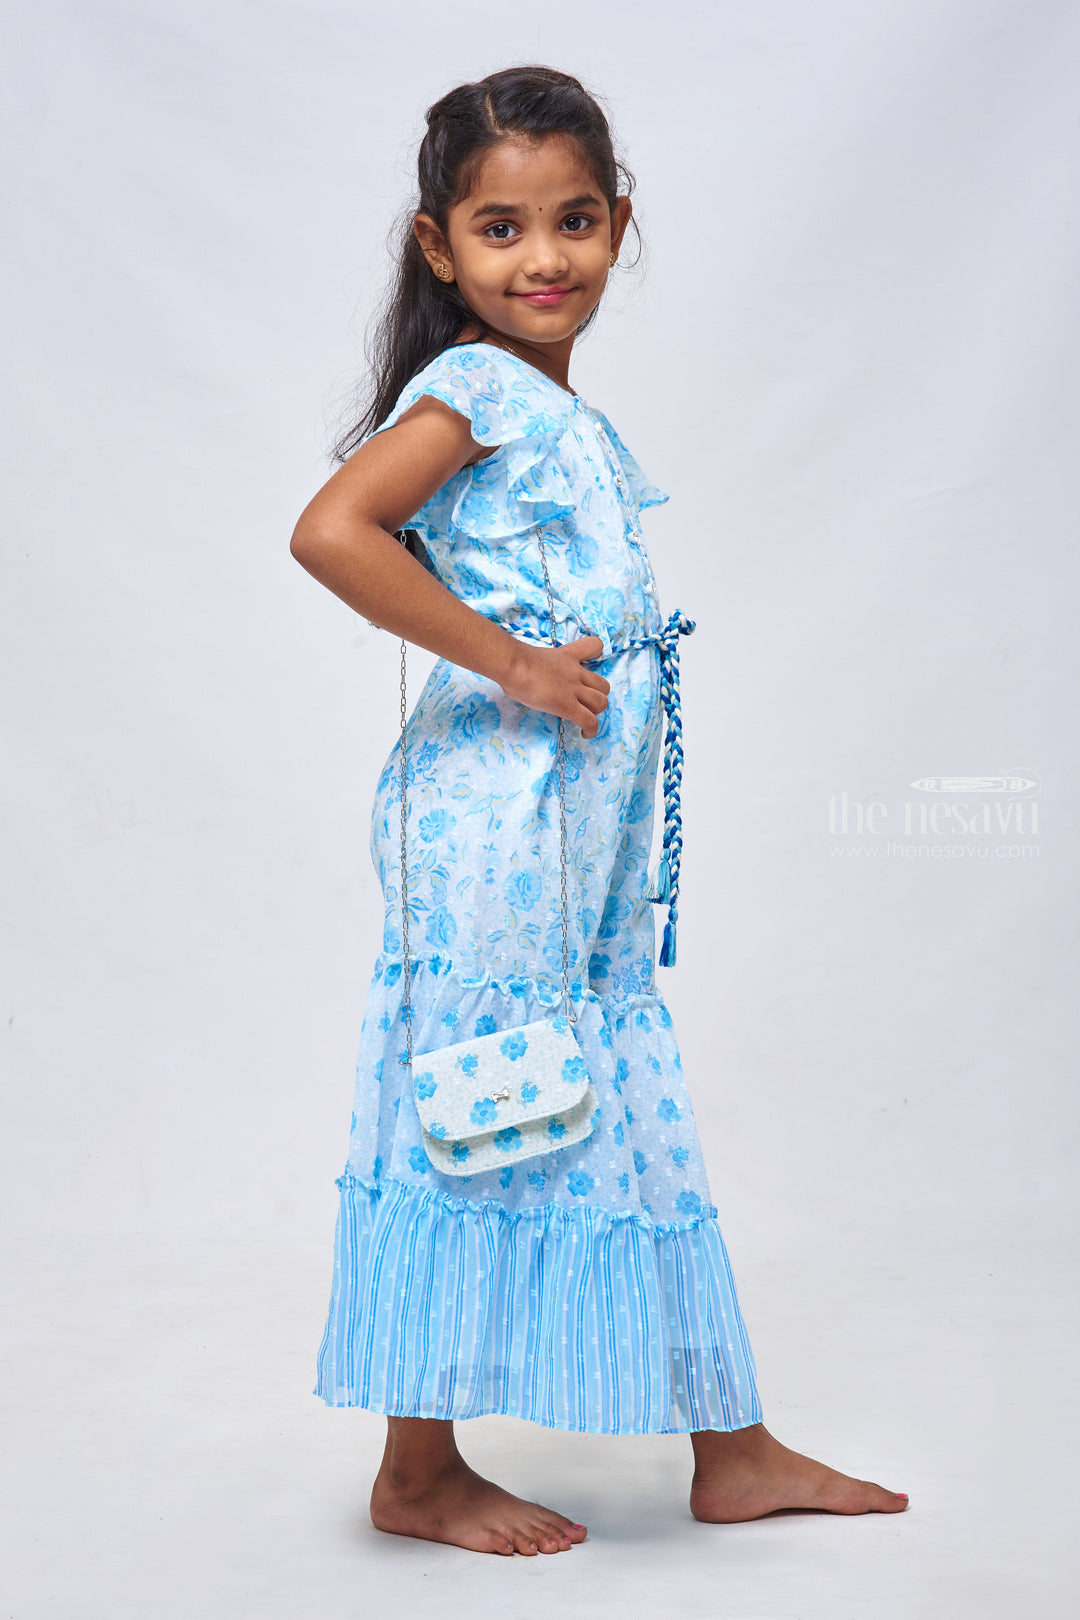 The Nesavu Girls Jumpsuit Floral Printed Blue Jumpsuit with Flare Sleeves: Modern Elegance for Girls Nesavu Jumpsuit for Little Girls | latest Designer Dresses | The Nesavu